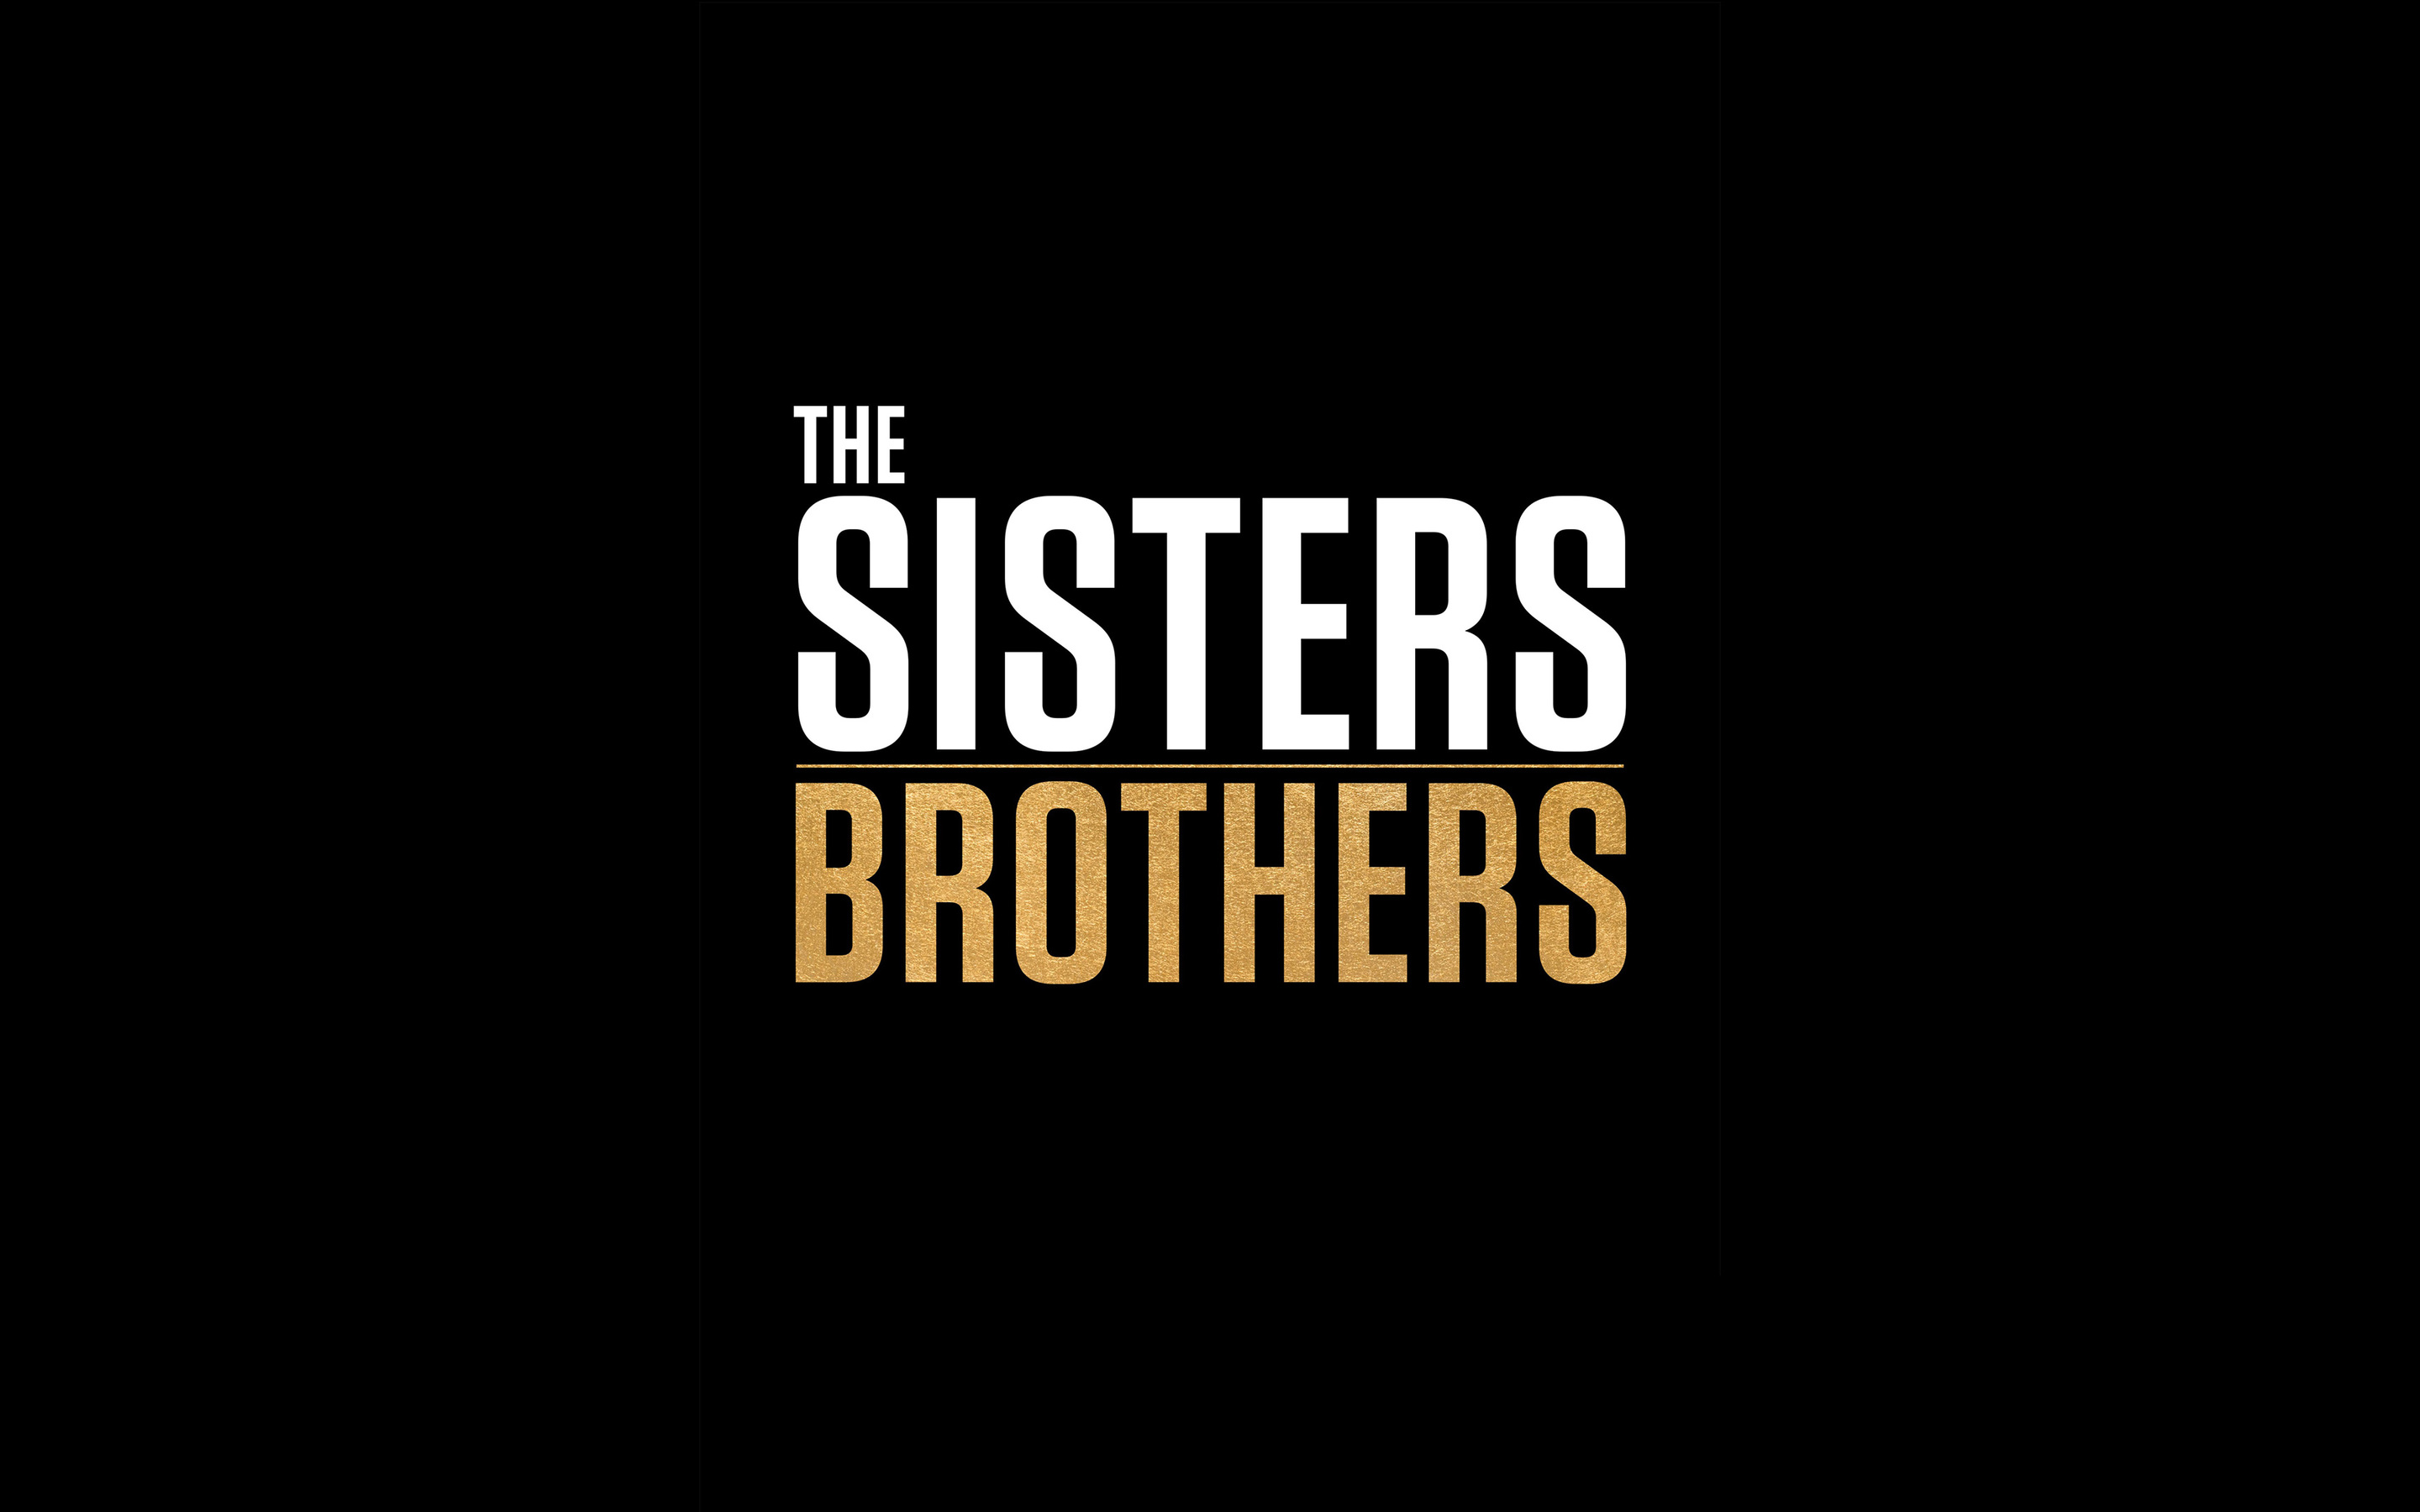 Братья Систерс 2018 Blu-ray 1c интерес. Брат обои.